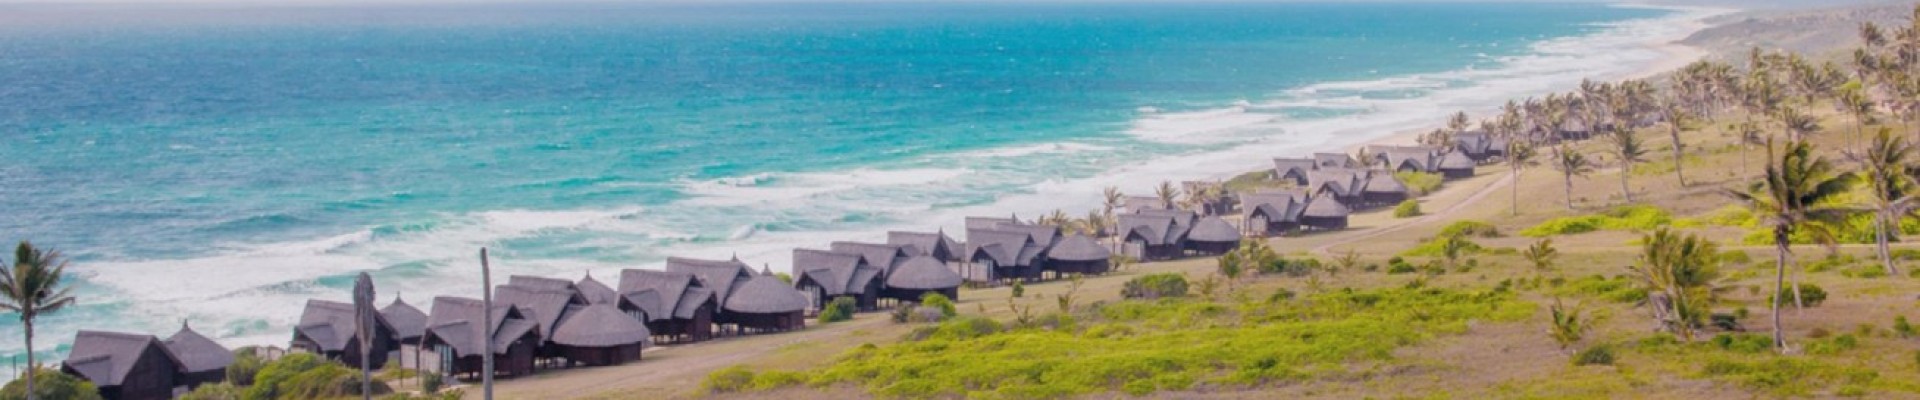 4* Massinga Beach Resort - Mozambique Package (4 nights)